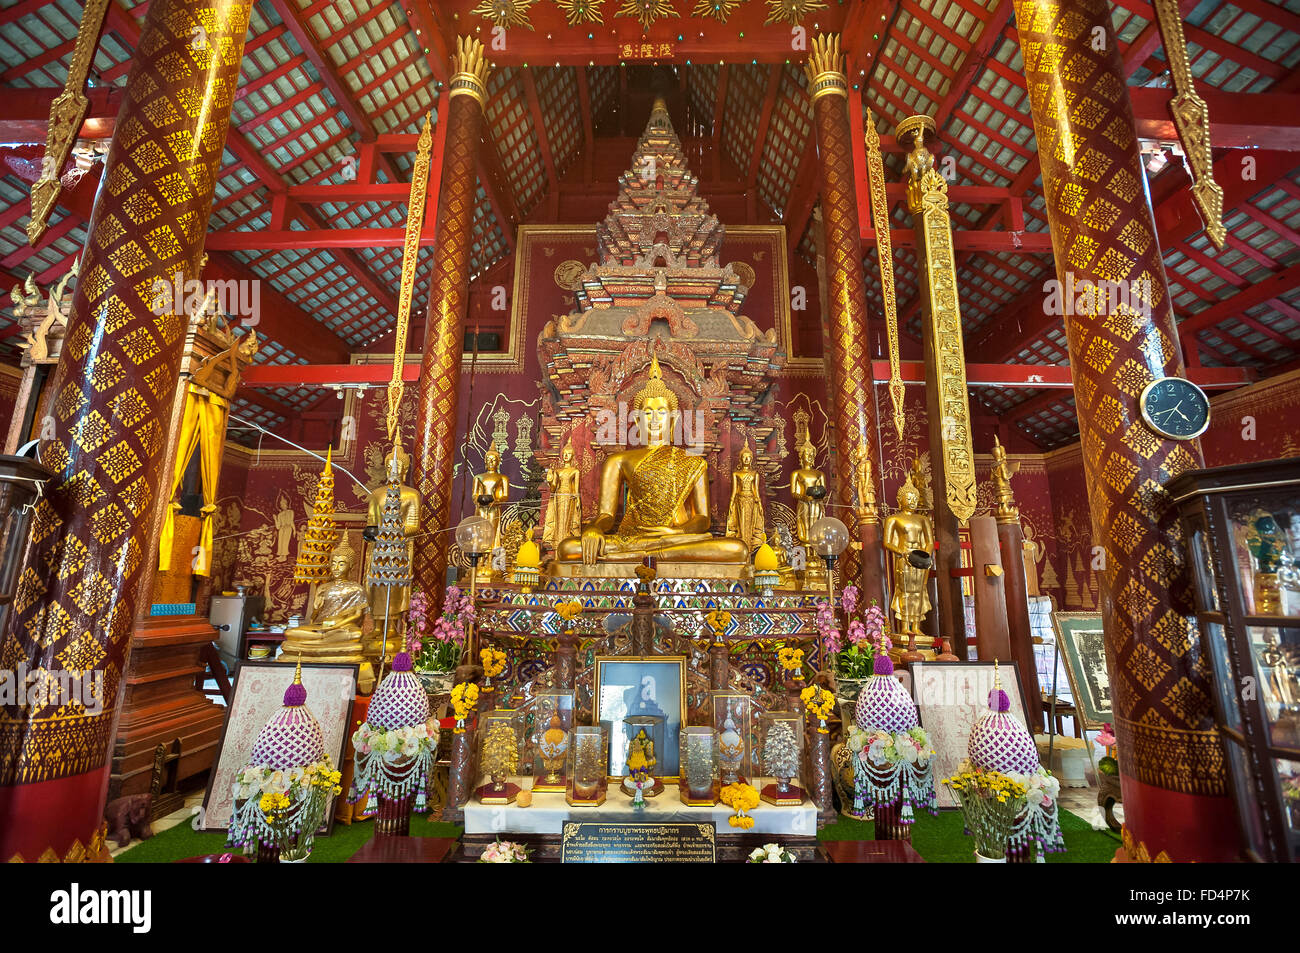 Reich verzierte Innenraum des Wat Chiang Man, der älteste Tempel in Chiang Mai, Thailand Stockfoto